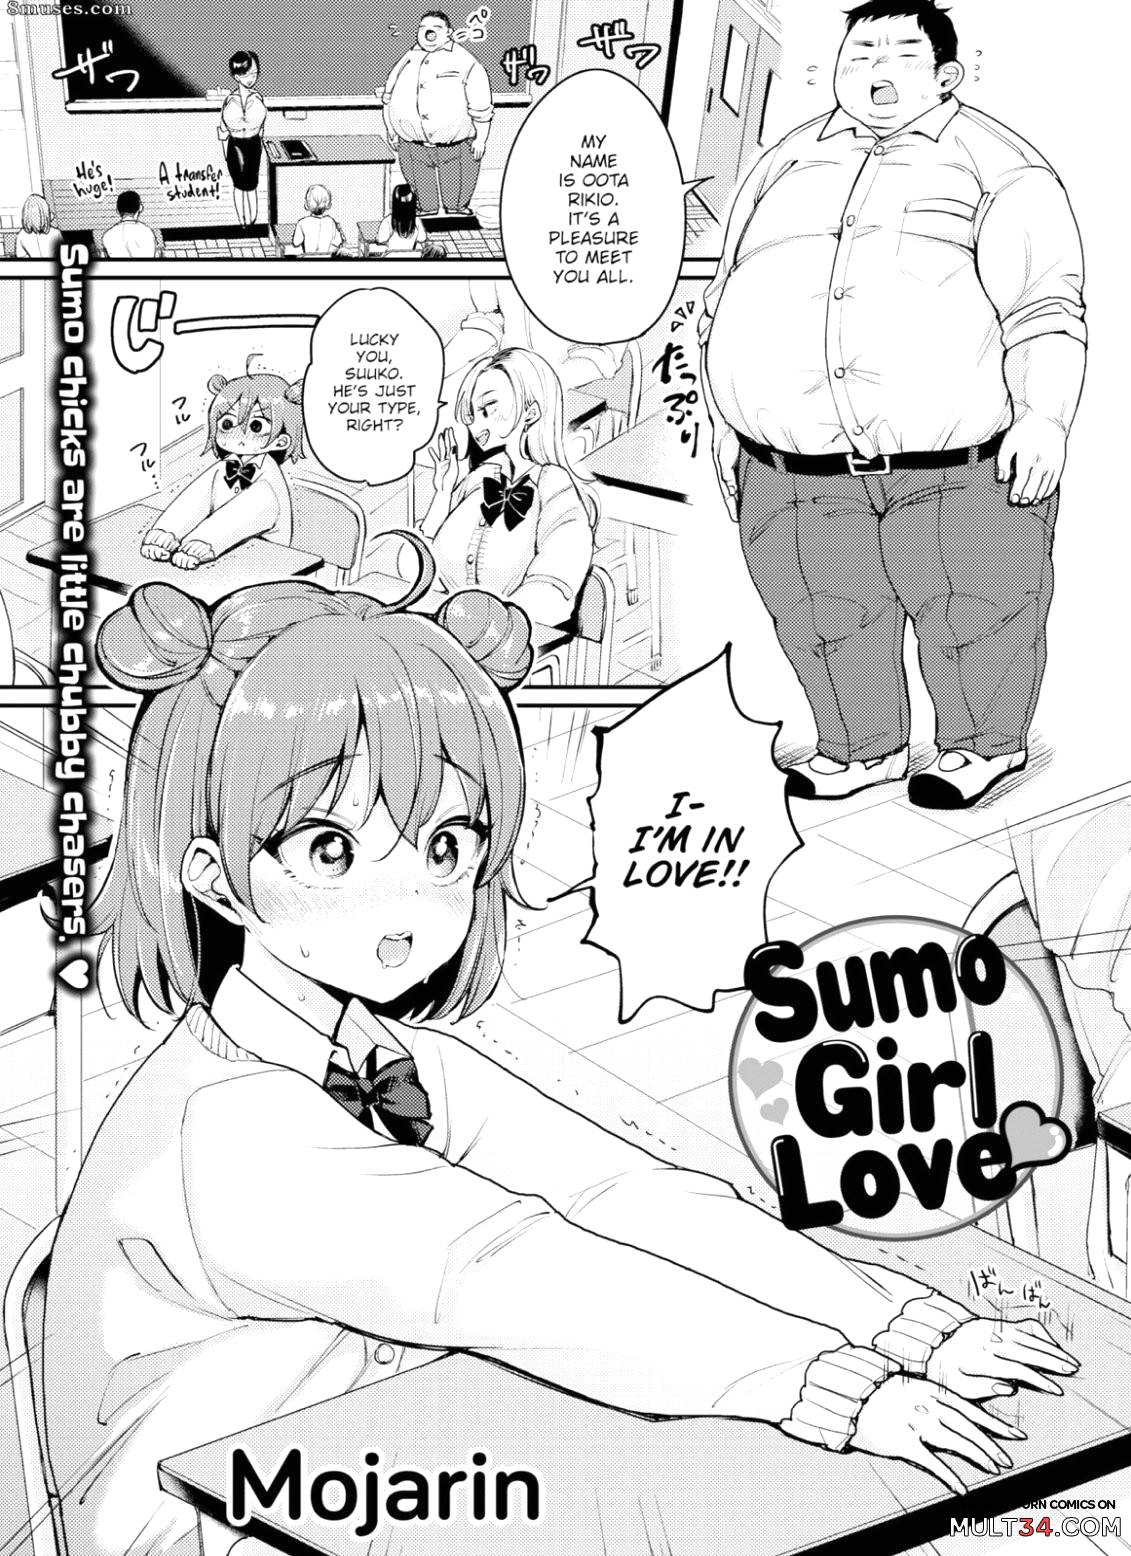 Girl Loving Girl - Sumo Girl Love porn comic - the best cartoon porn comics, Rule 34 | MULT34